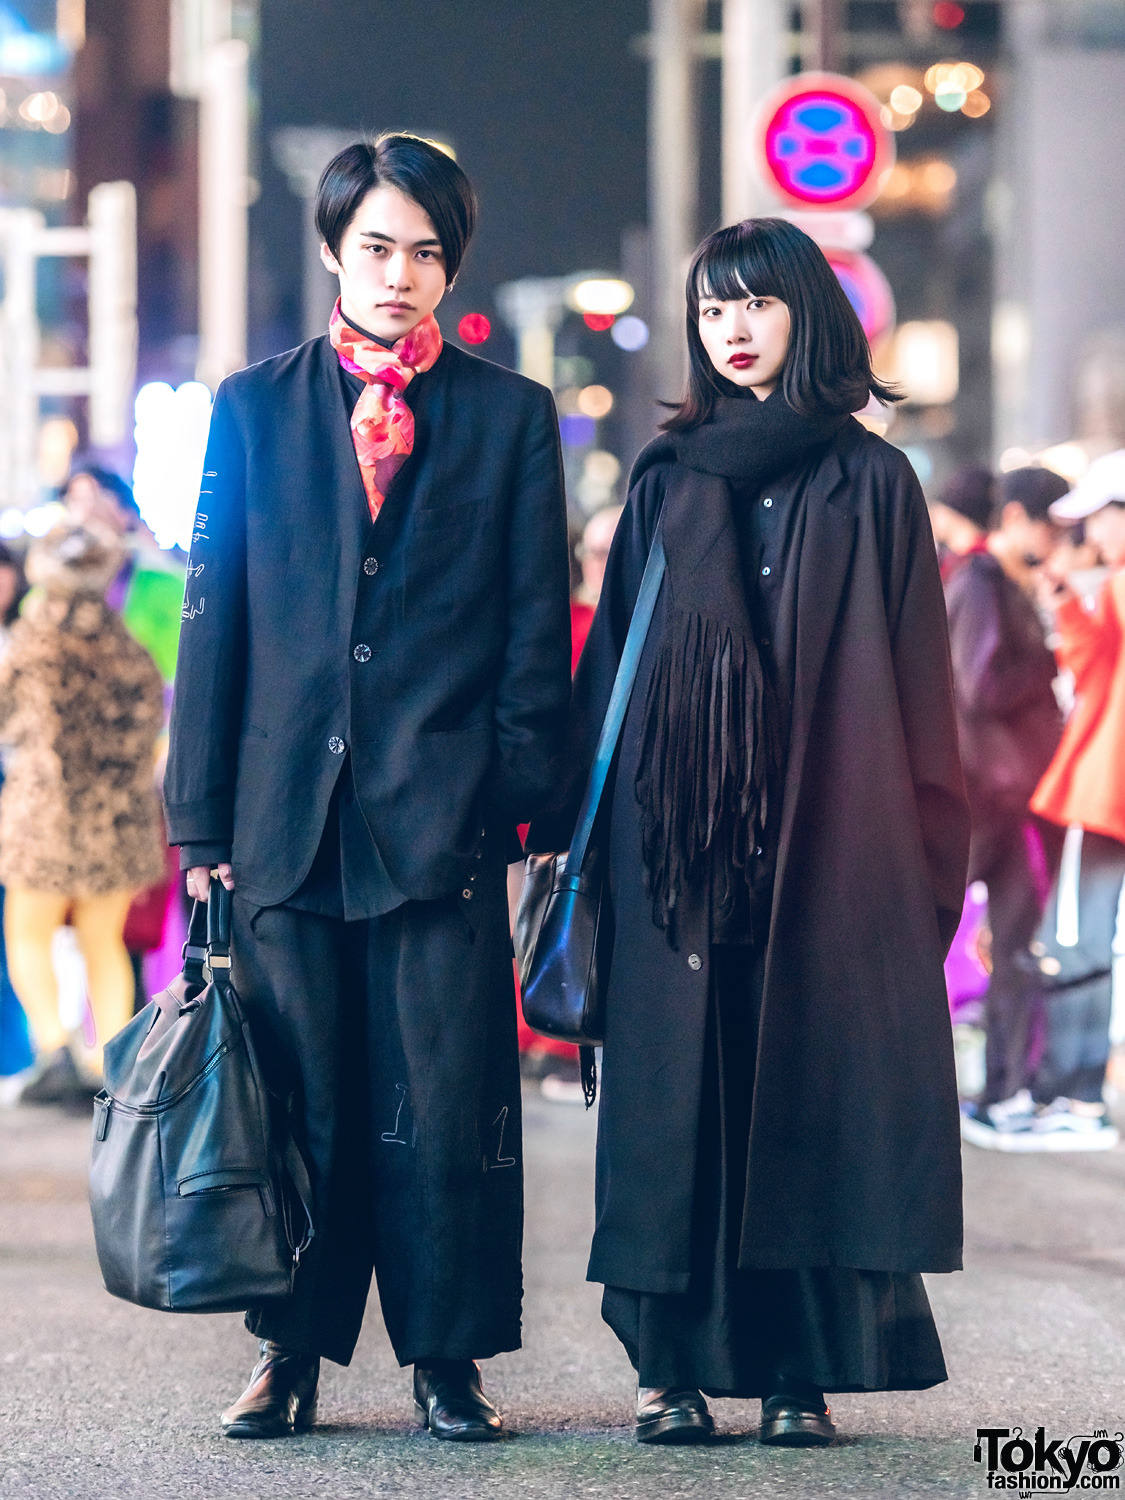 tokyo-fashion:Mika and Tsukasa on the street in Harajuku wearing ...